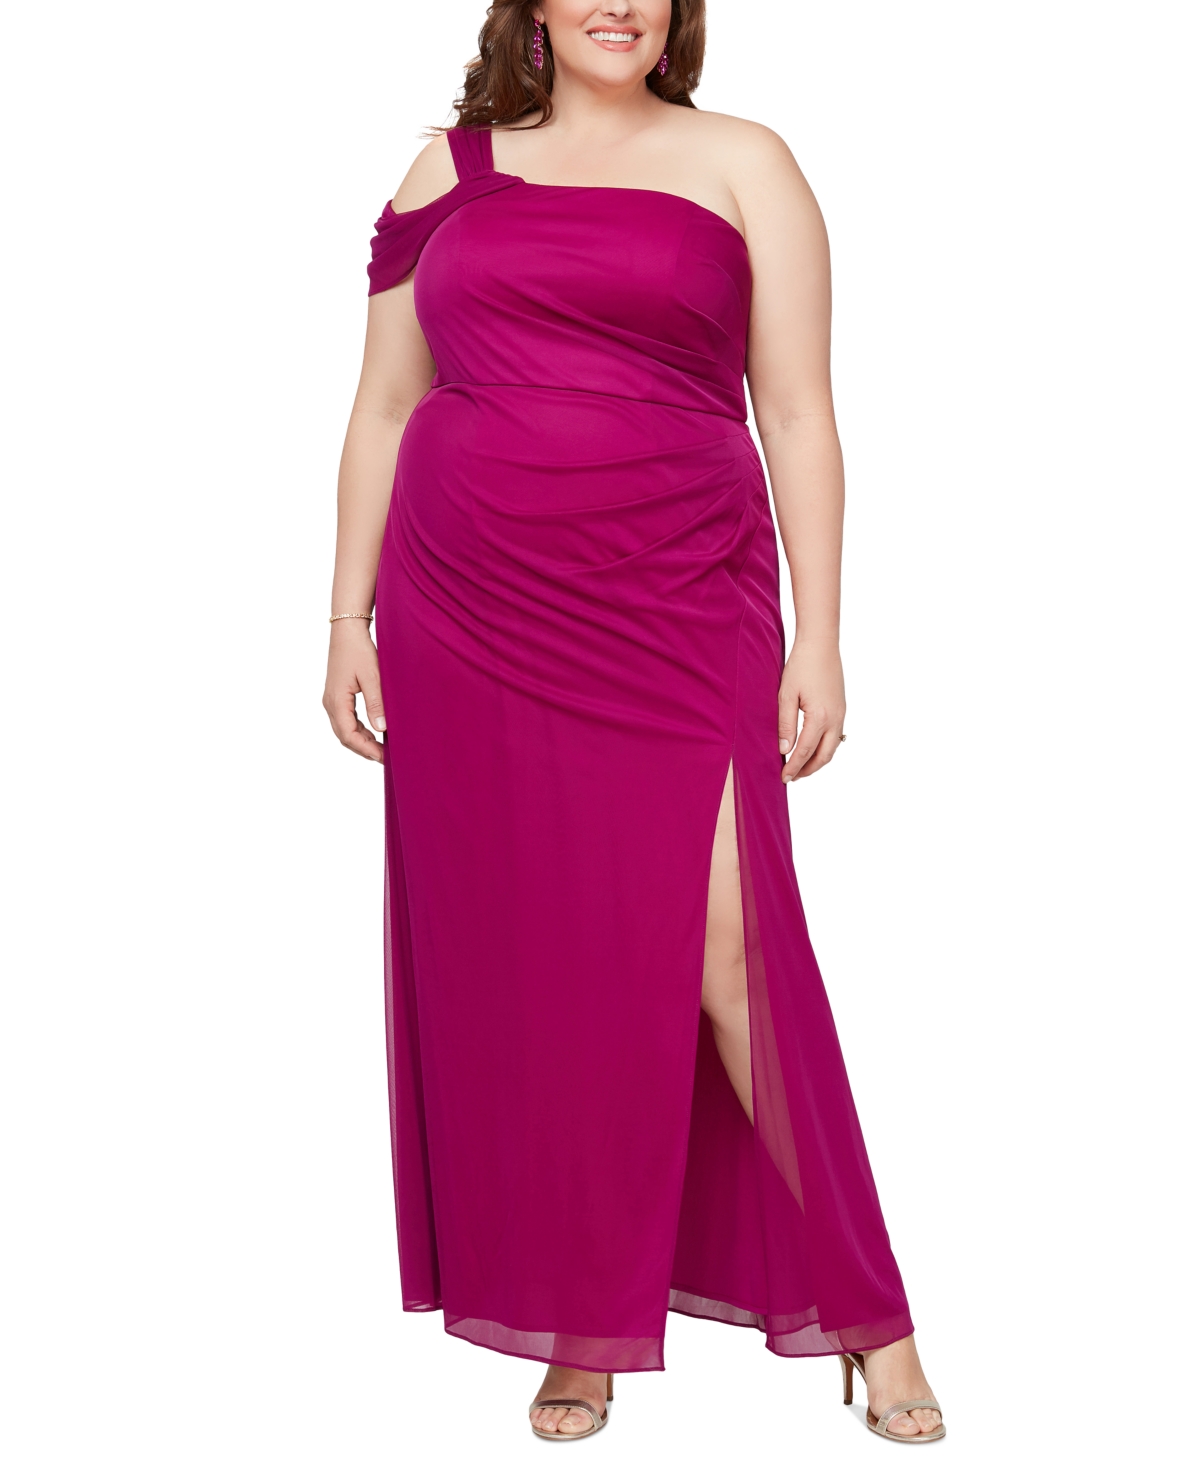 Plus Size One-Shoulder Draped Evening Dress - Magenta